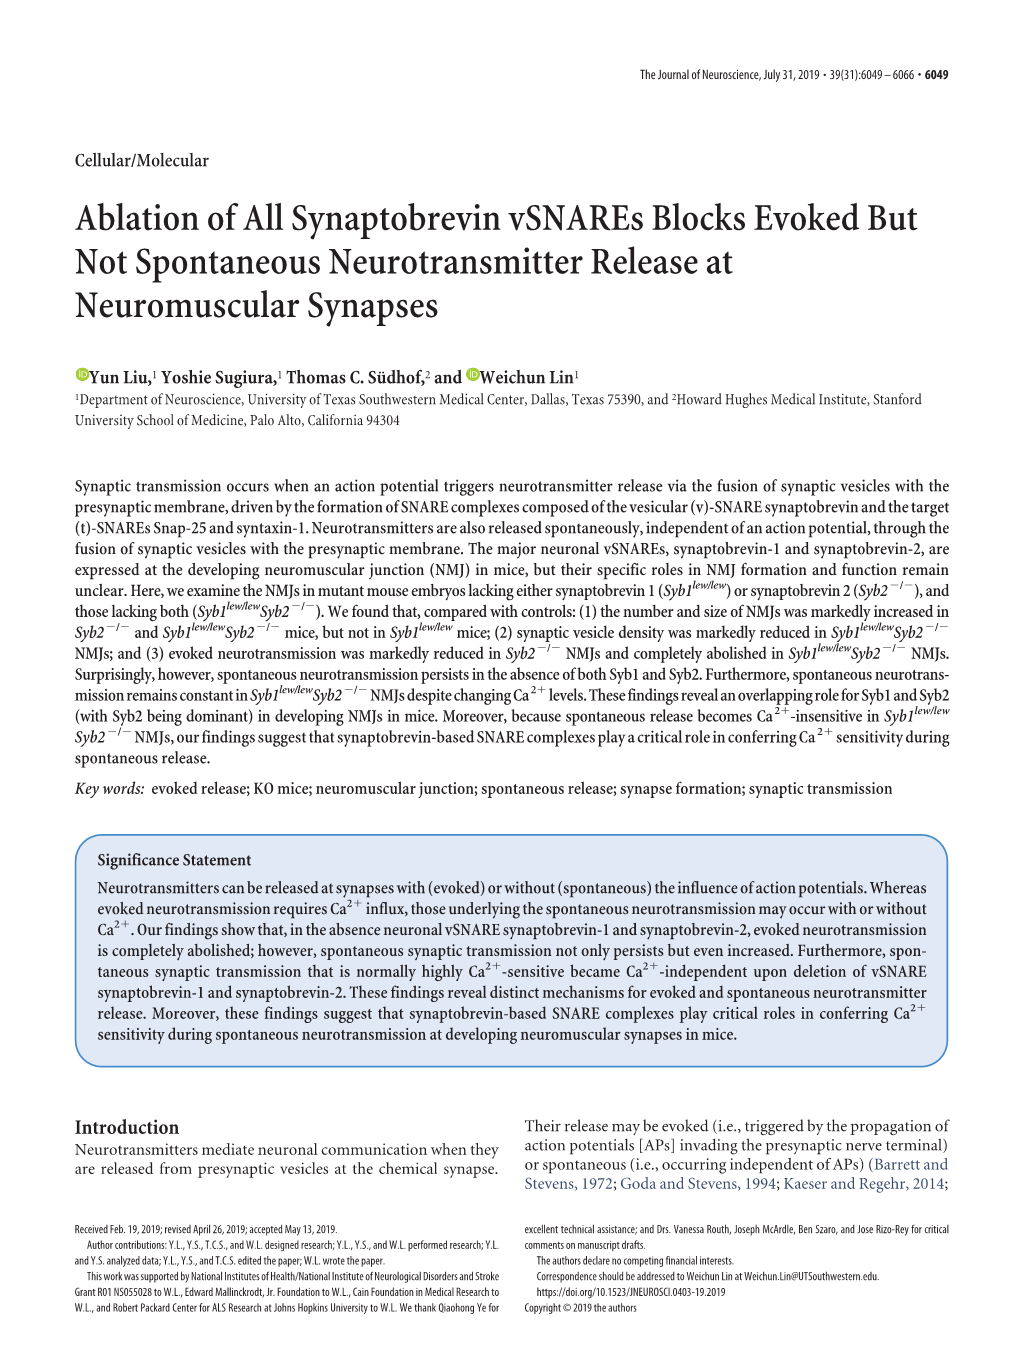 Ablation of All Synaptobrevin Vsnares Blocks Evoked but Not Spontaneous Neurotransmitter Release at Neuromuscular Synapses